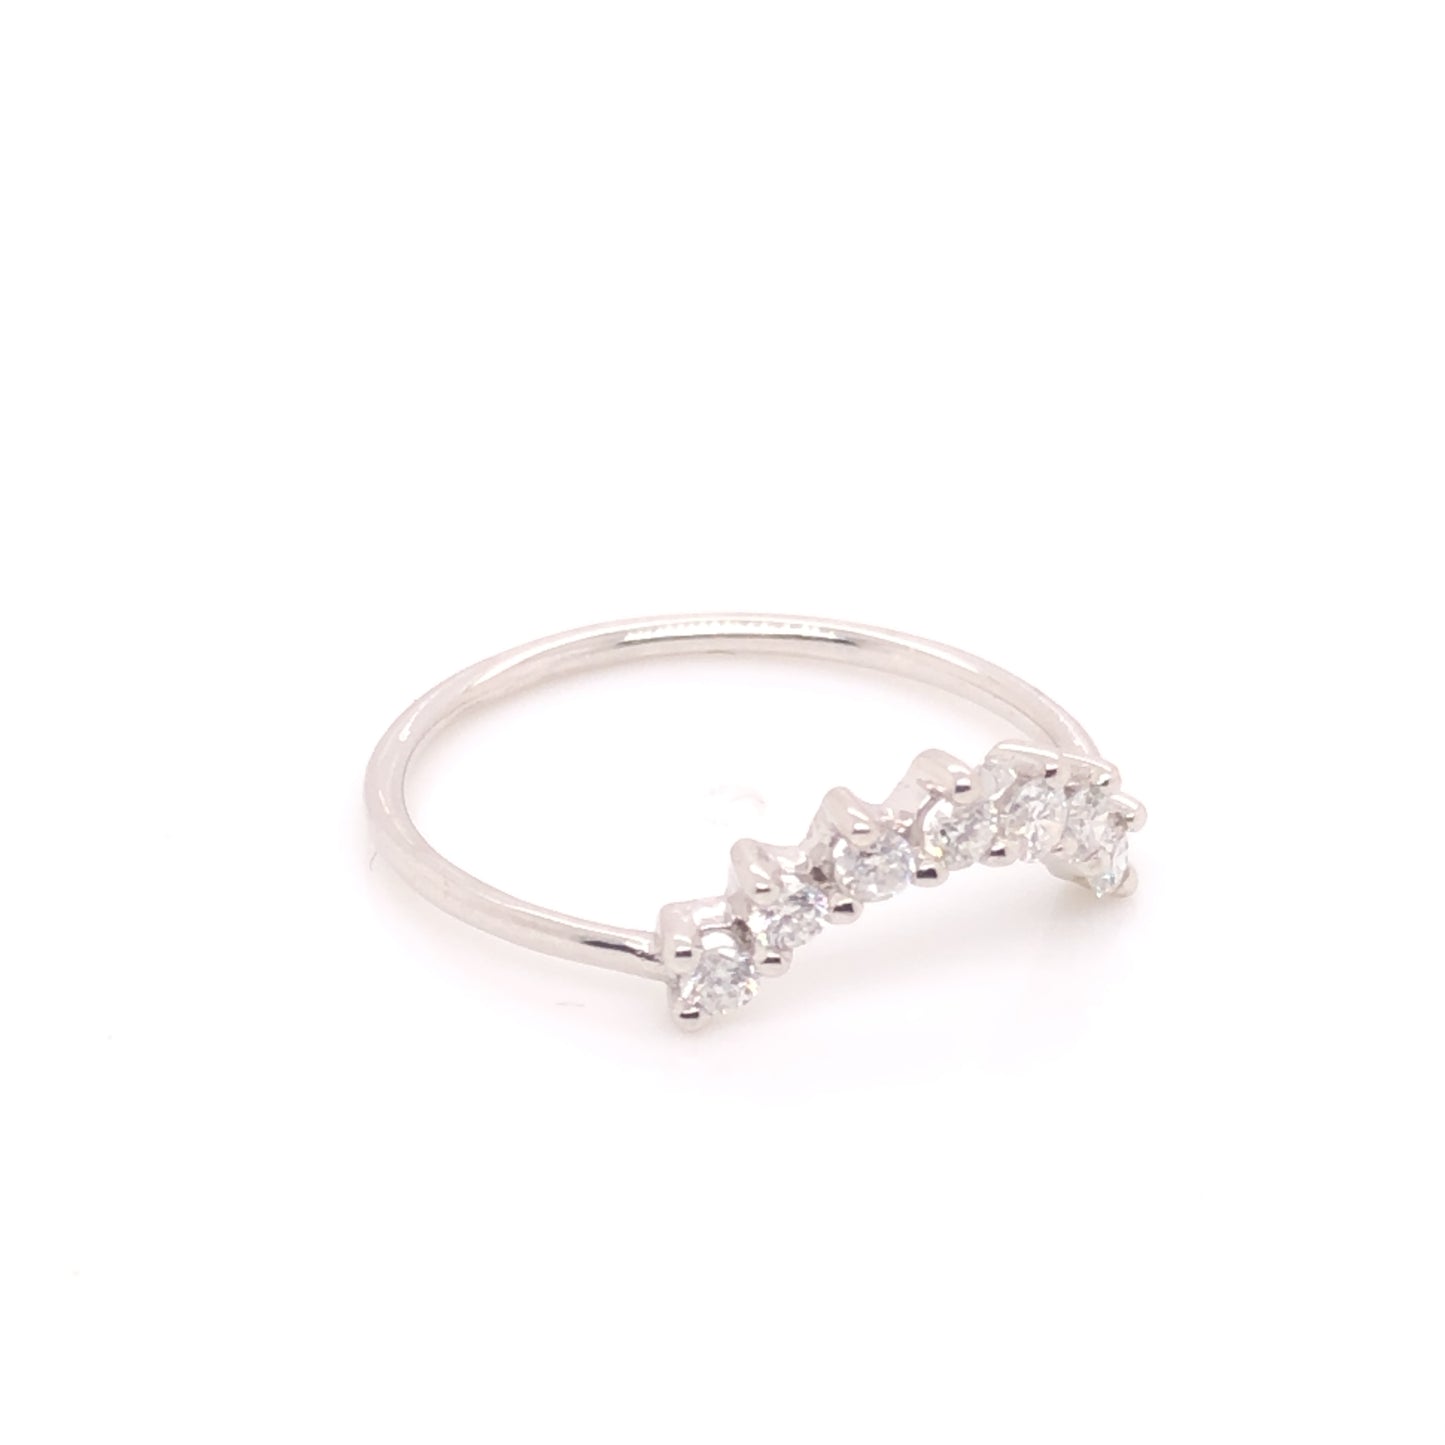 Mijal Crown Ring with White Diamonds